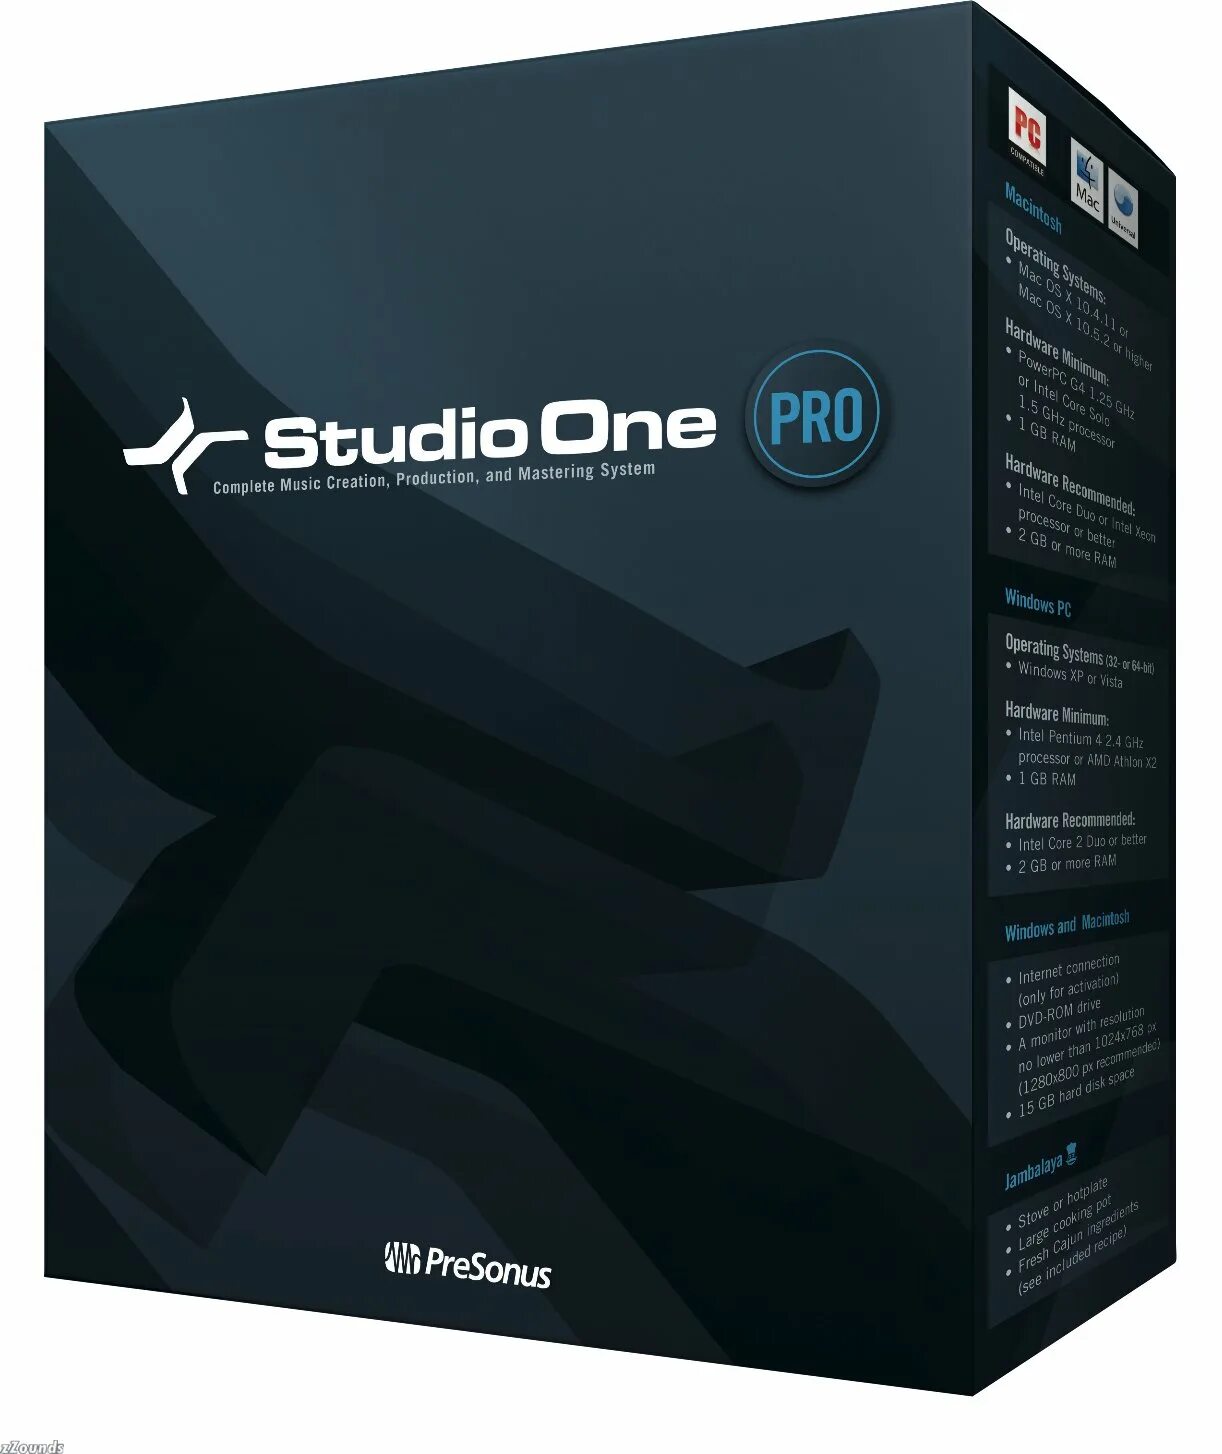 Pro 1.16 5. PRESONUS - Studio one 6 professional. PRESONUS Studio one 5 professional. Studio one 6.2 PRESONUS. PRESONUS Studio one.